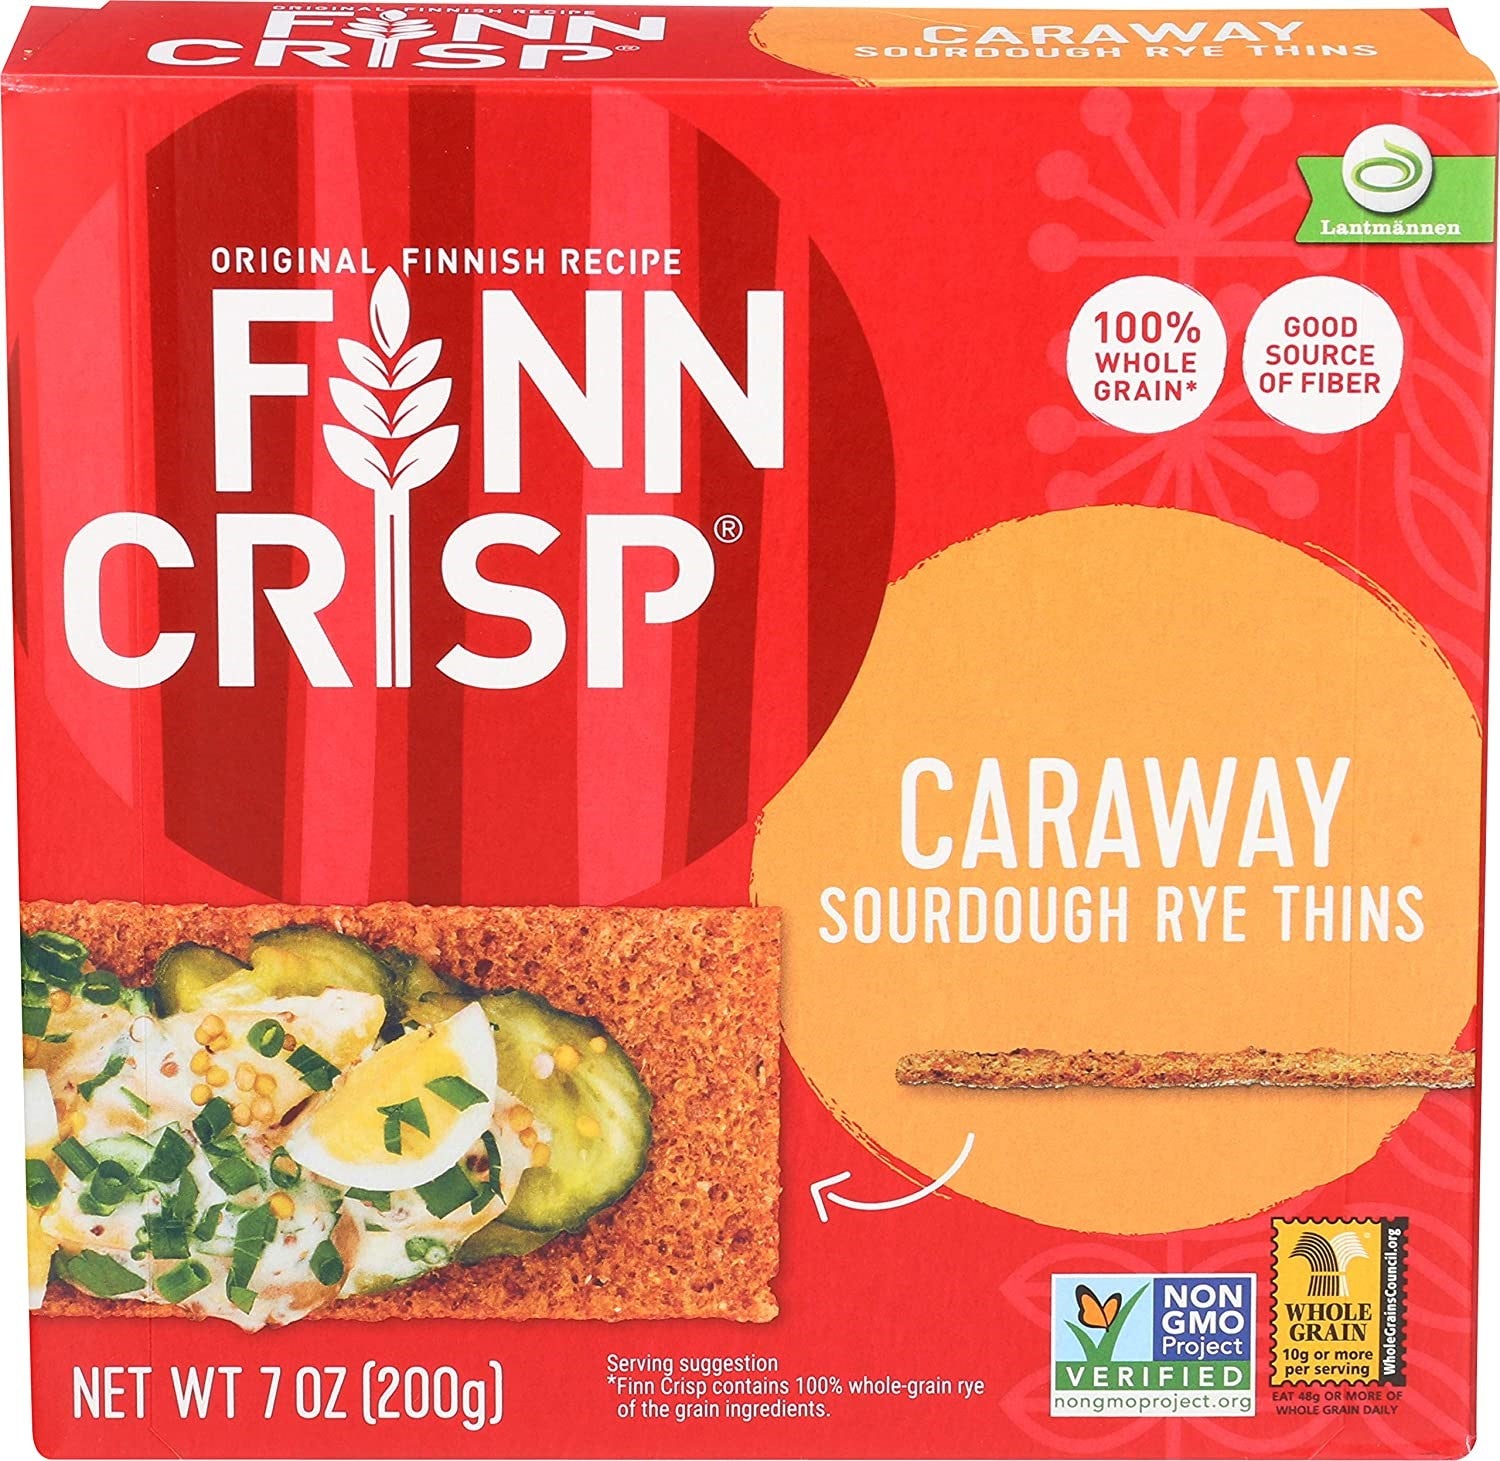 Crisp Cook 7oz Caraway, Swedish Finn –